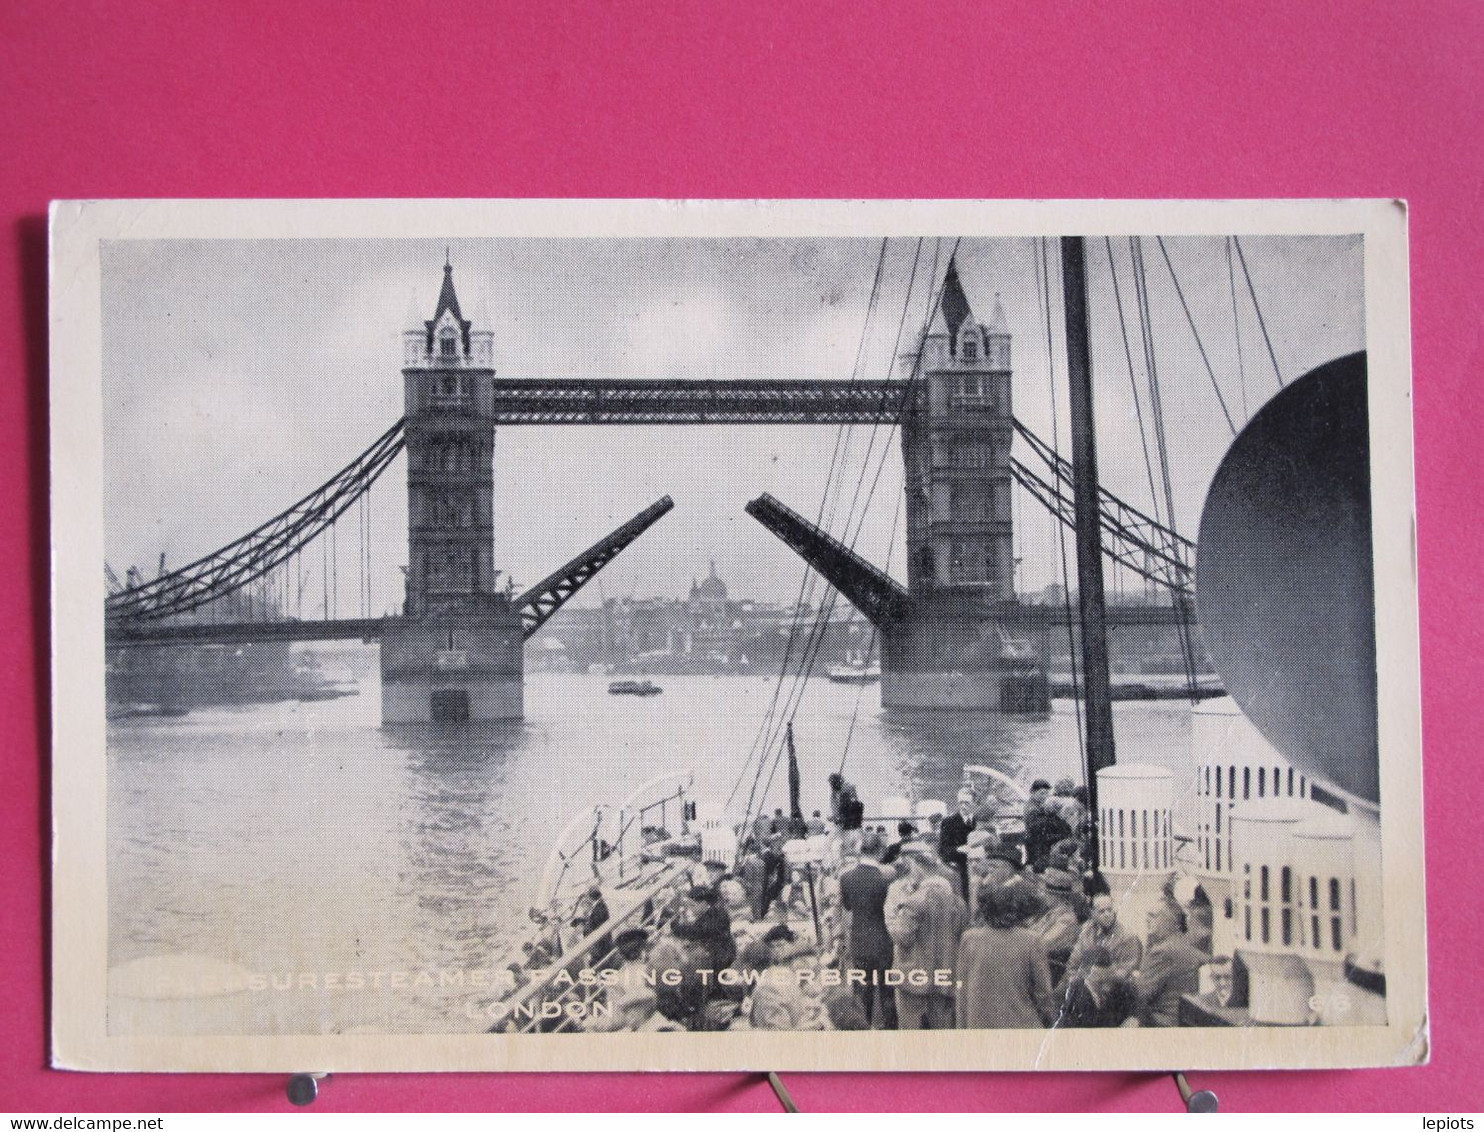 Visuel Très Peu Courant - Angleterre - London - Pleasure Steamer Passing Towerbridge - R/verso - River Thames